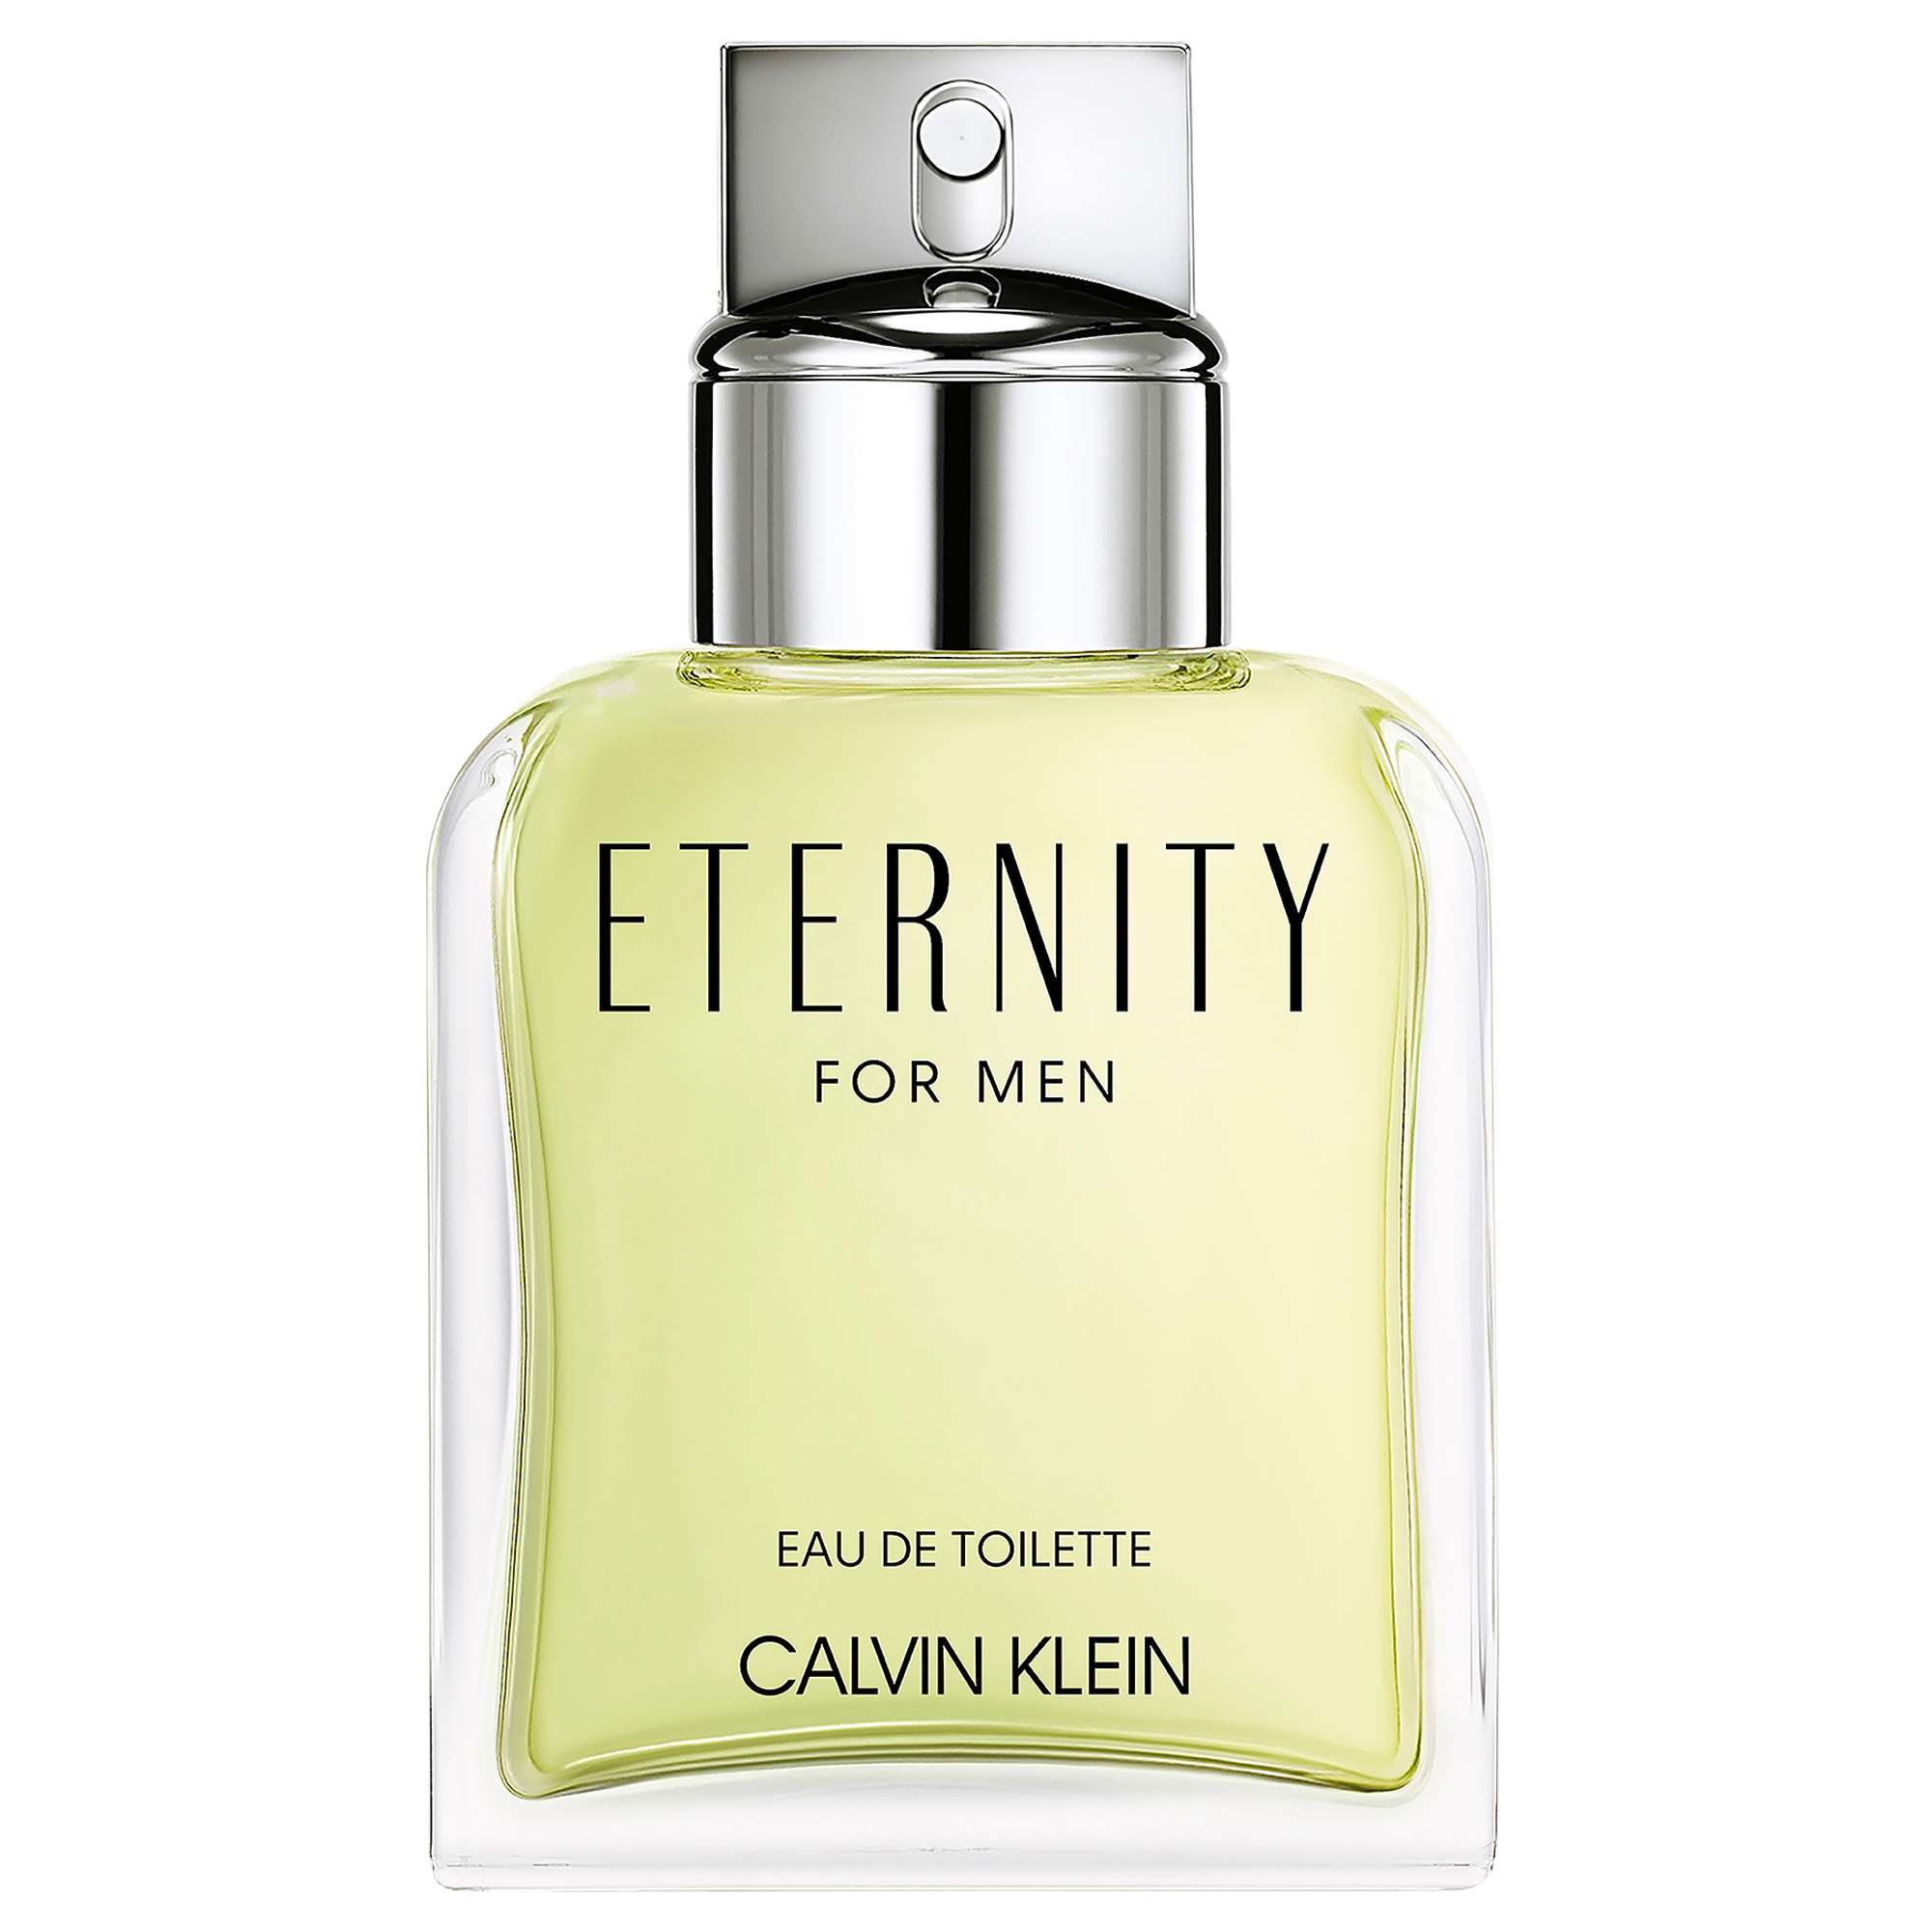 Photos - Men's Fragrance Calvin Klein Eternity For Men Eau de Toilette 100ml 